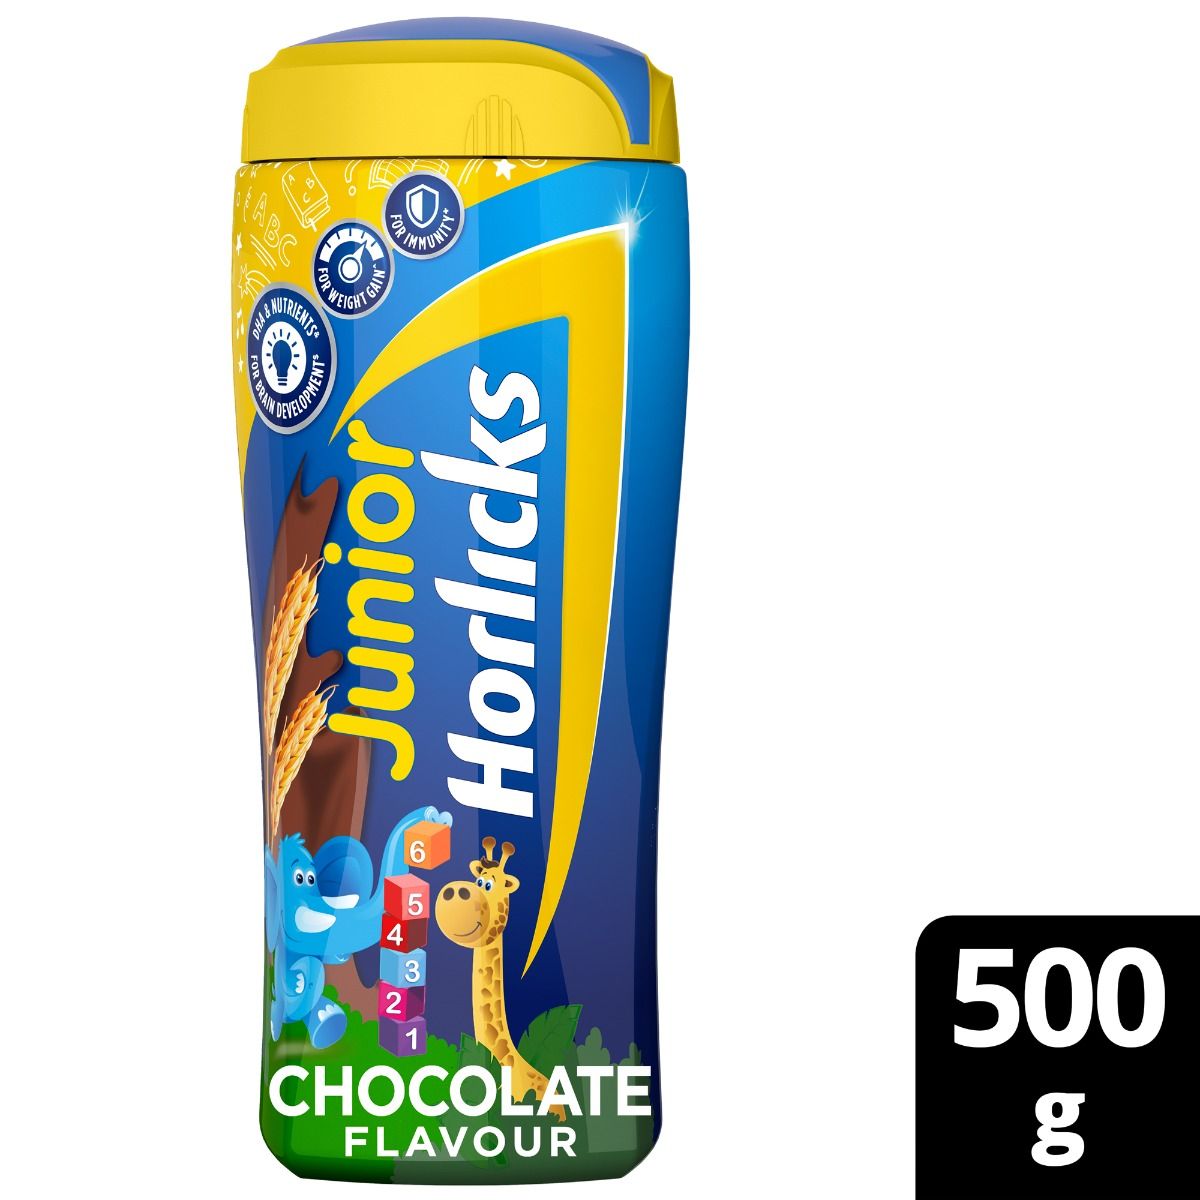 Buy Junior Horlicks Chocolate Flavoured Health & Nutrition Drink, 500 gm Jar Online